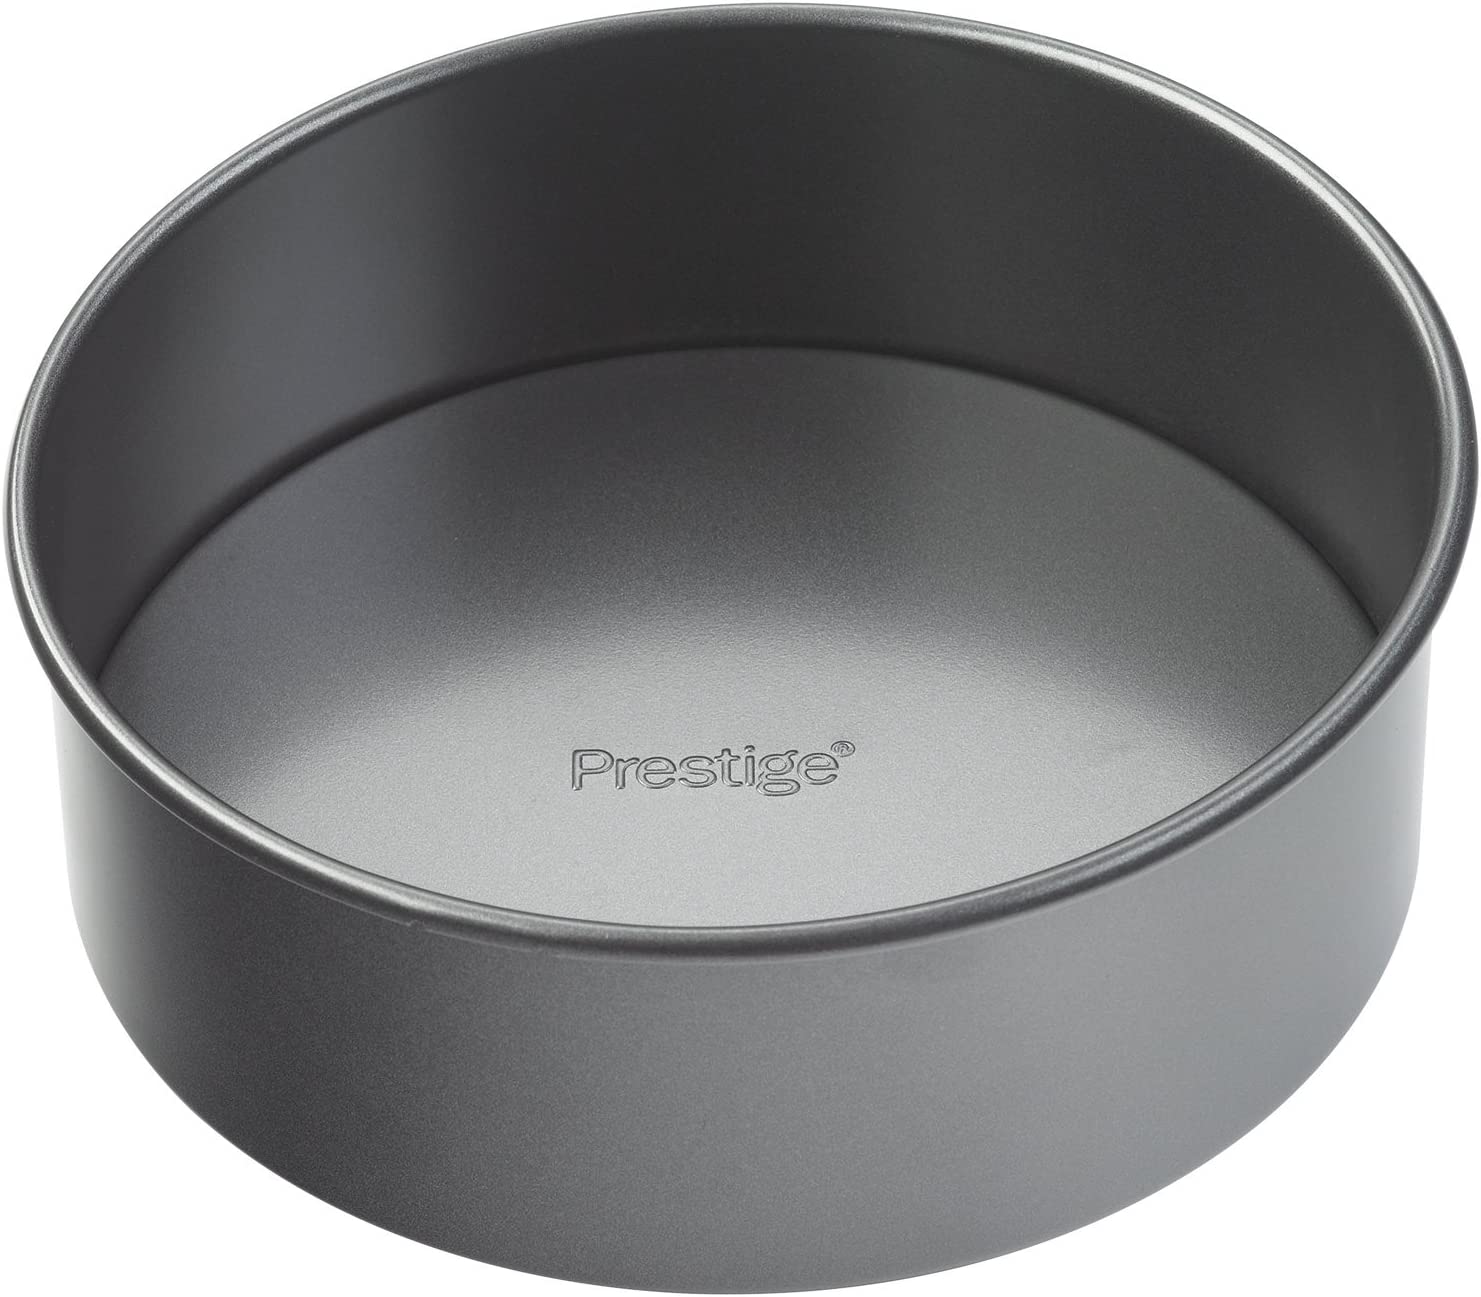 Prestige Steel 8-Inch Loose Base Round Cake Tin, Black